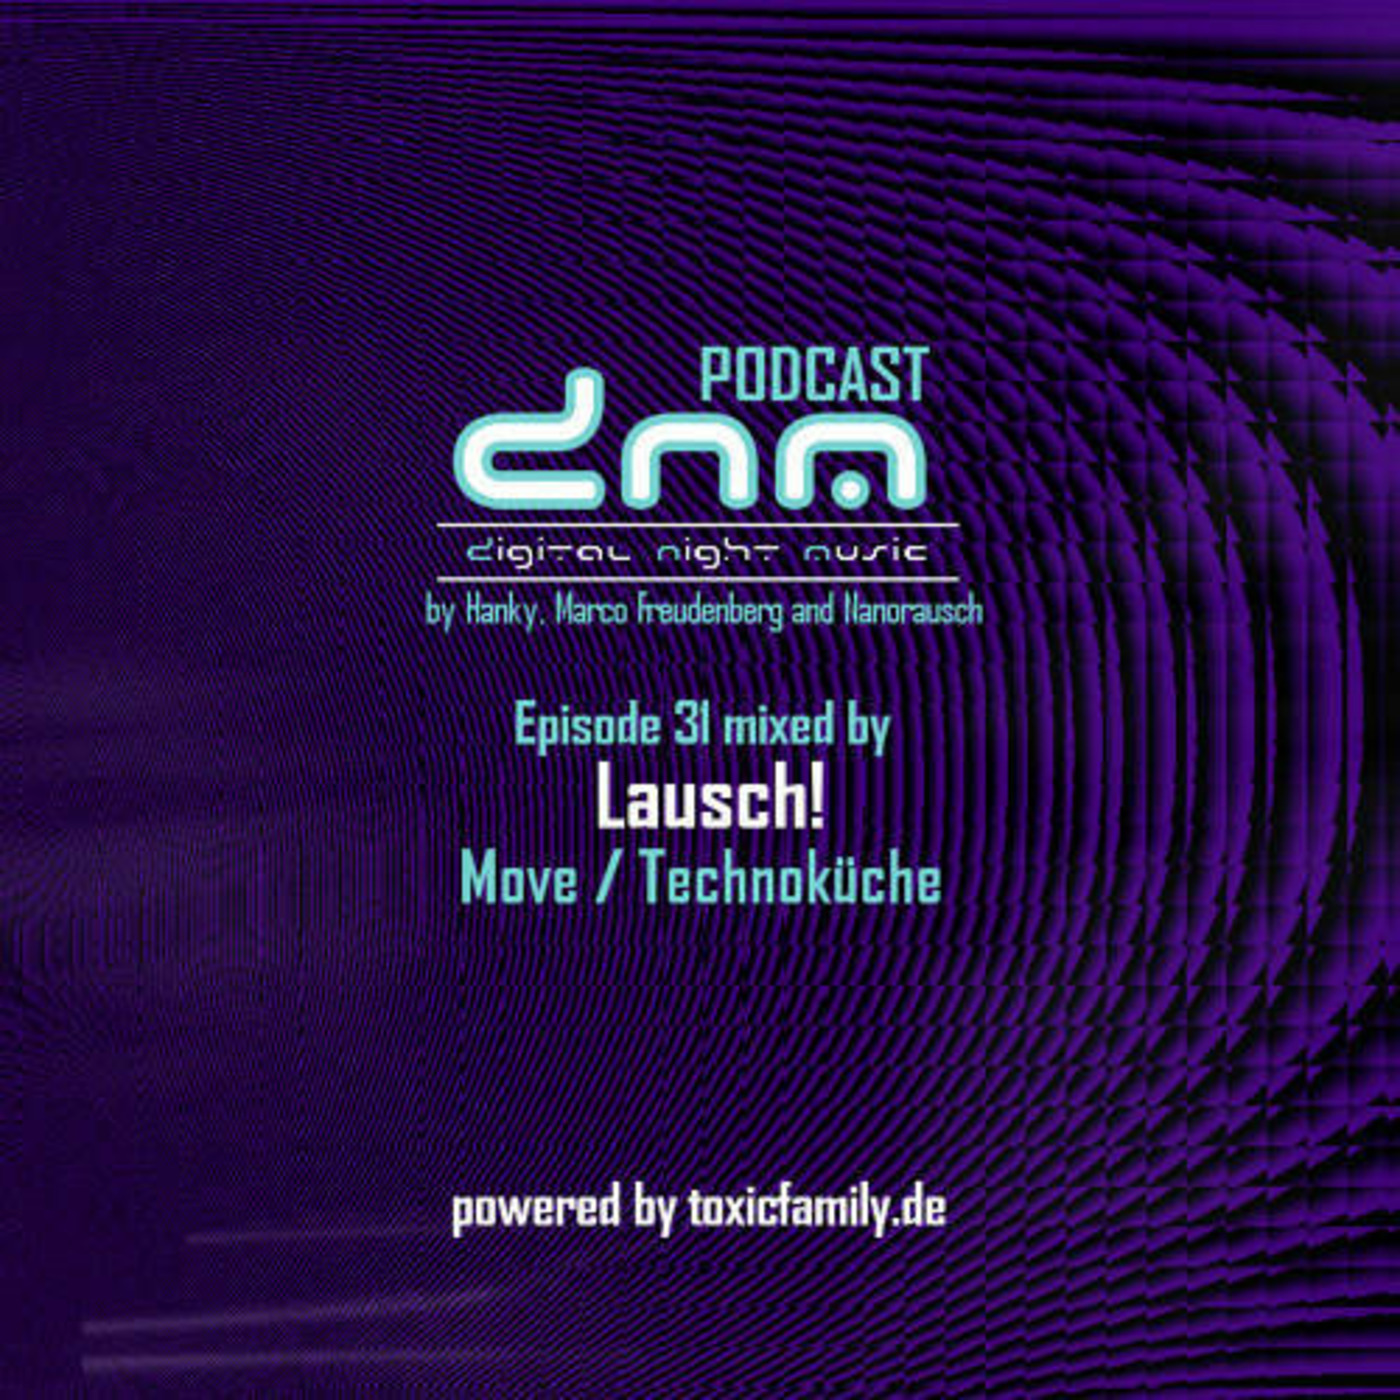 Lausch! - Digital Night Music Podcast 031 (2016-09-20)